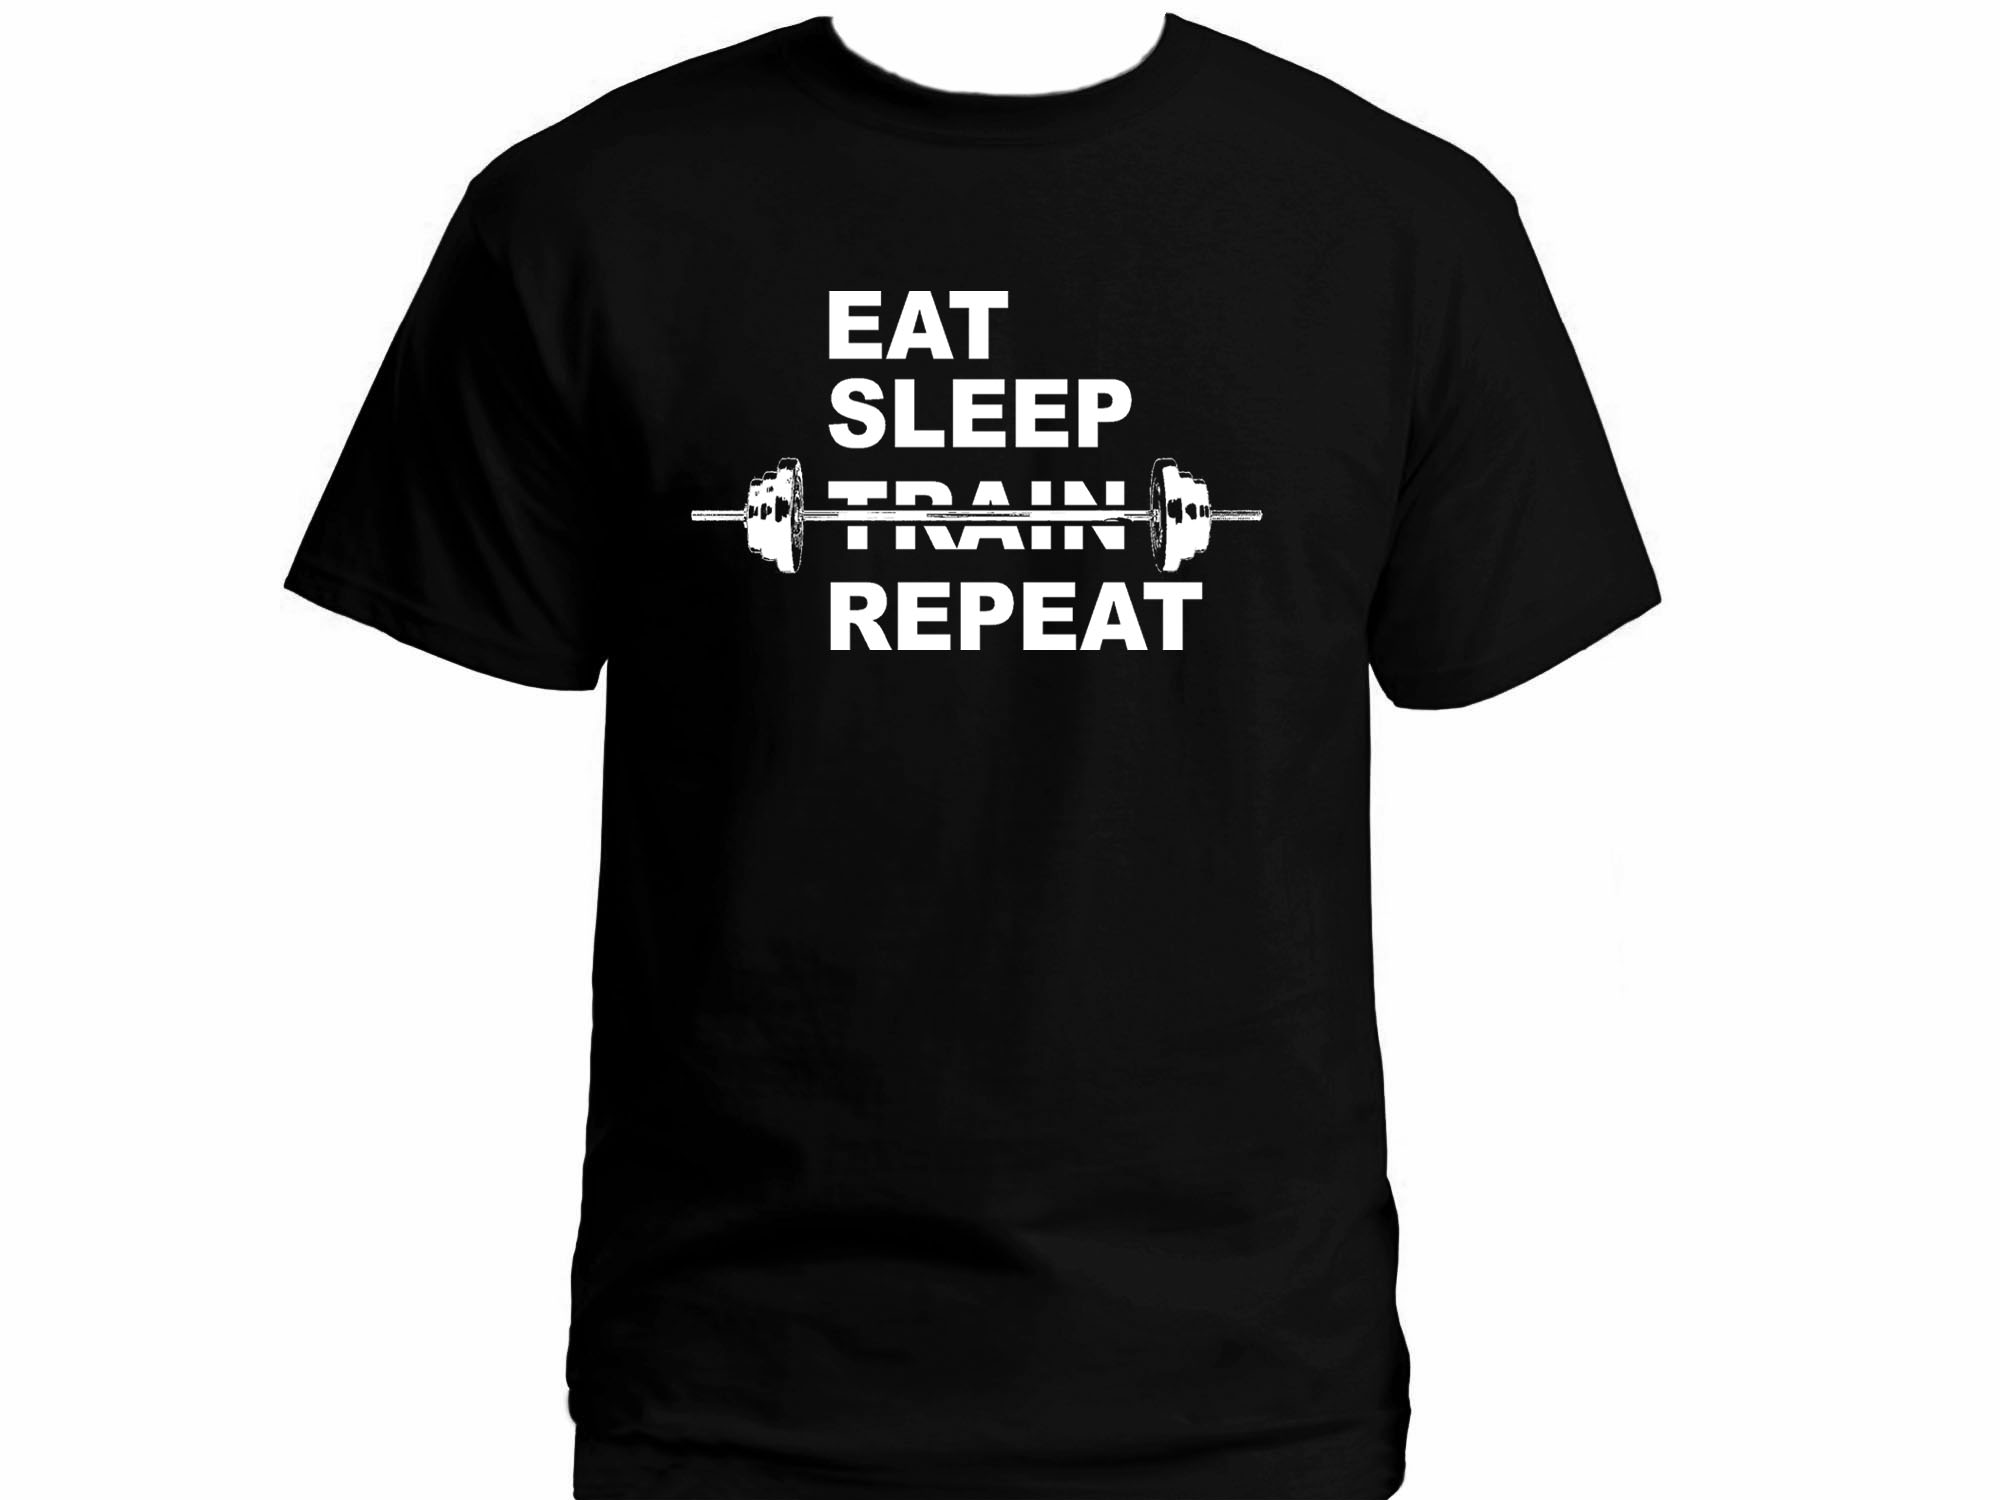 Eat sleep train repeat gym t-shirt